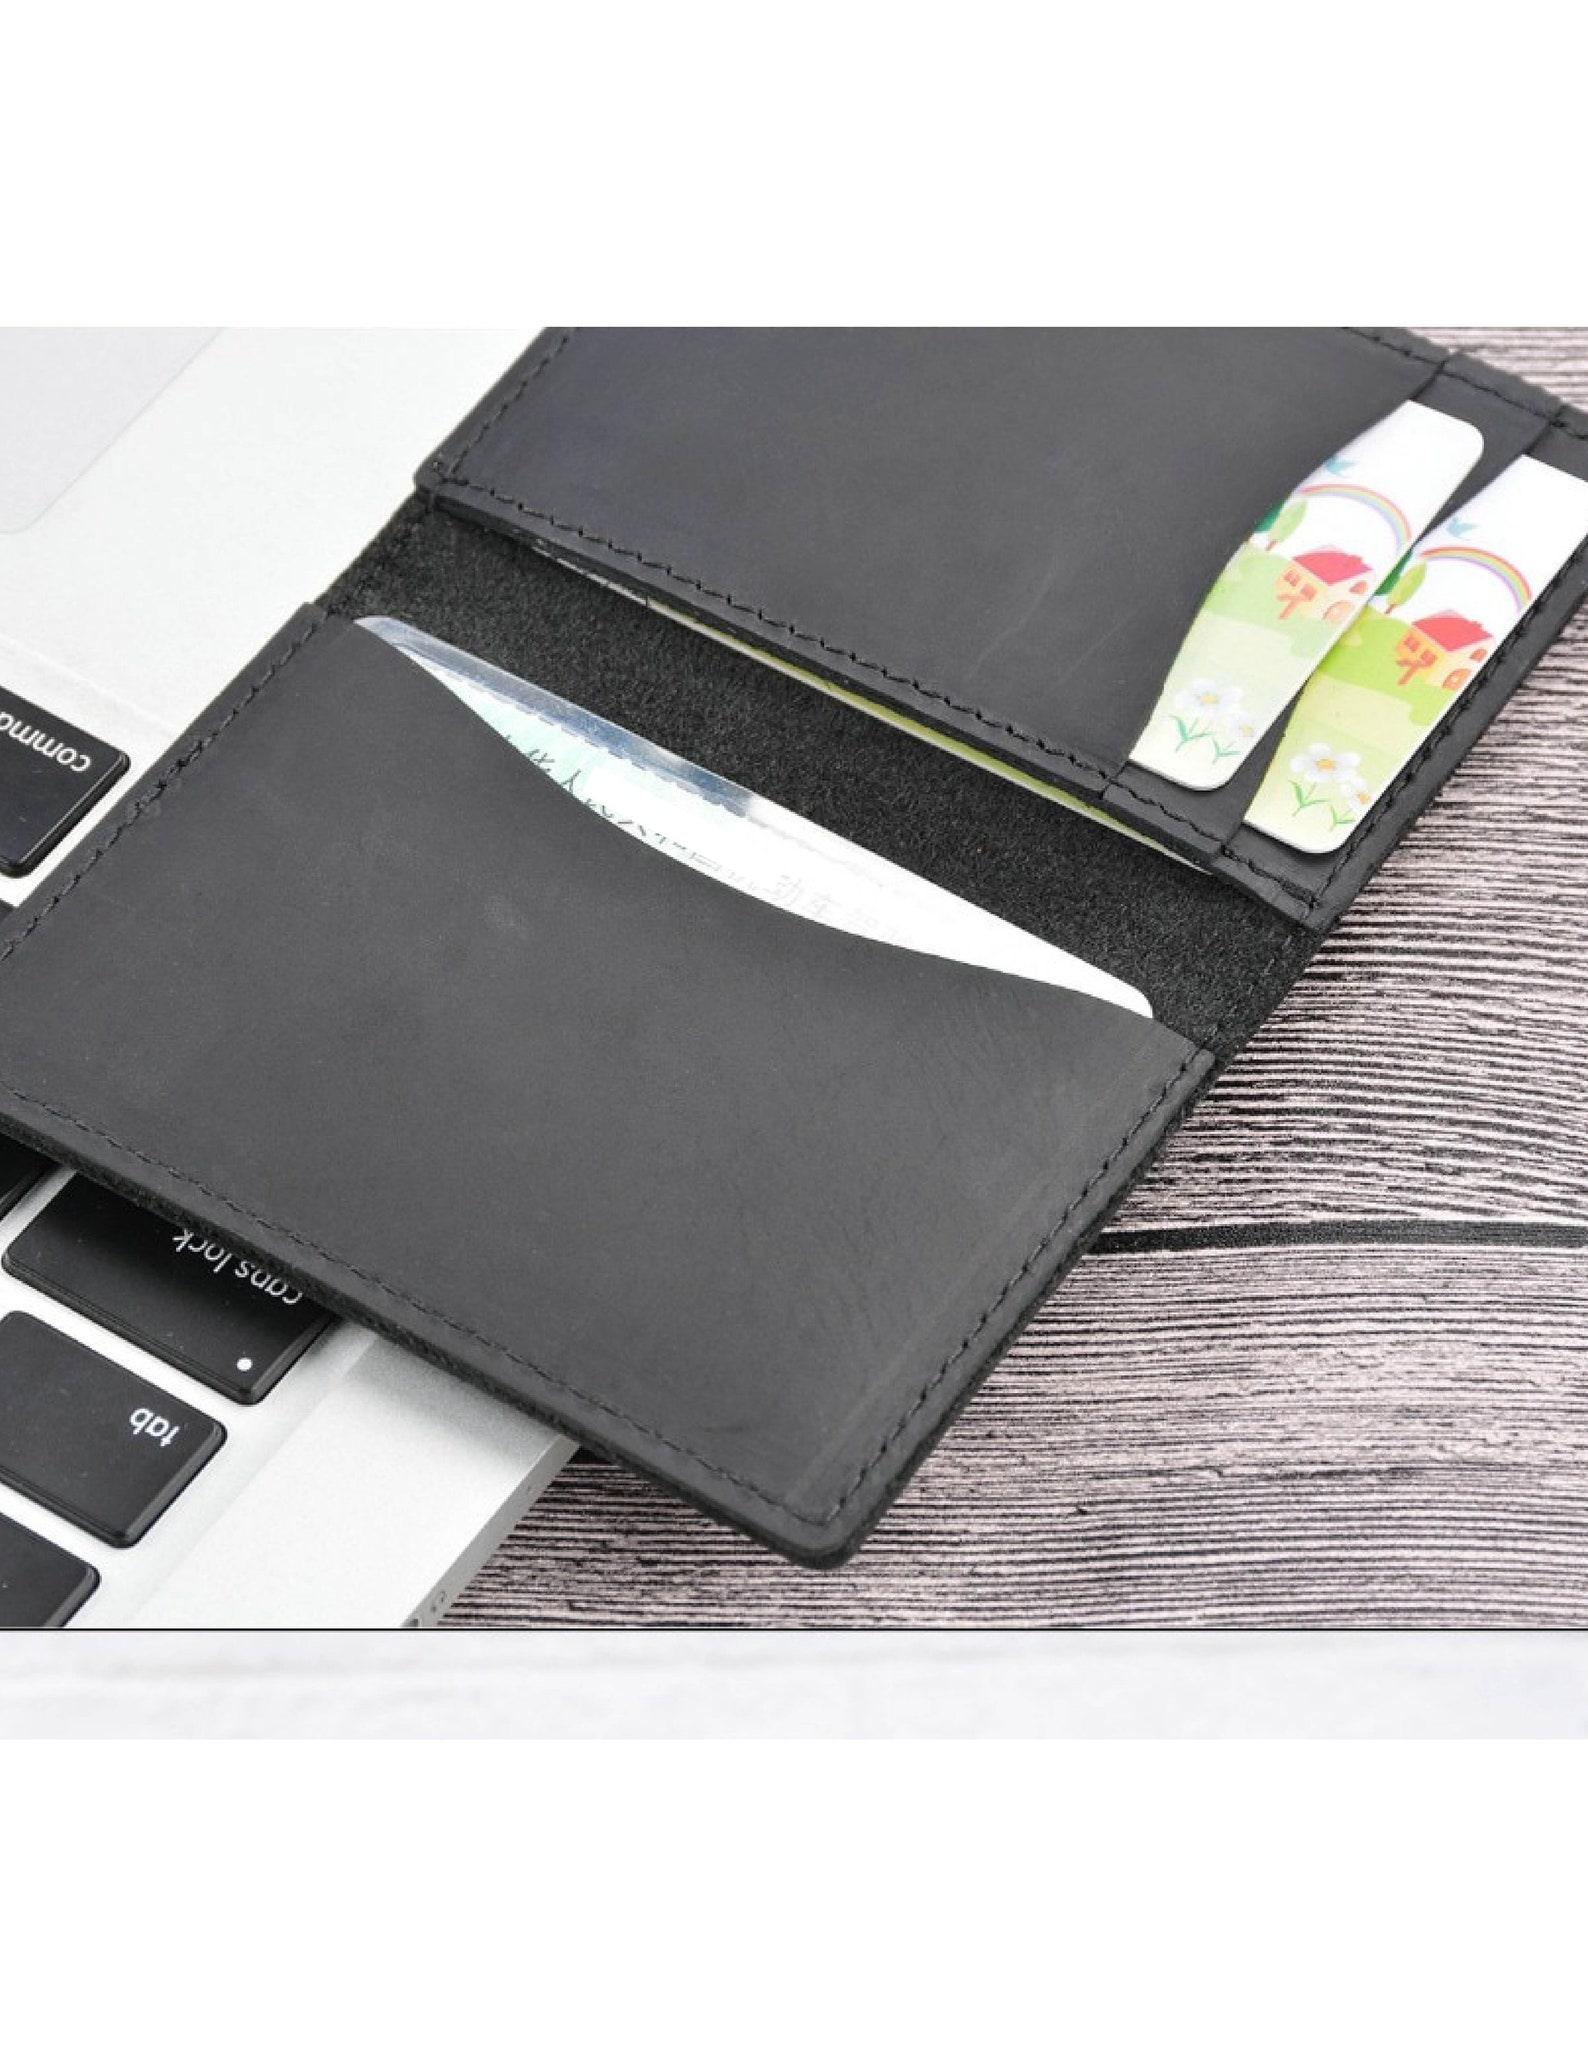 Black Sleek Wallet MINIMALIST WALLET Leather Slim Wallet for - Etsy ...